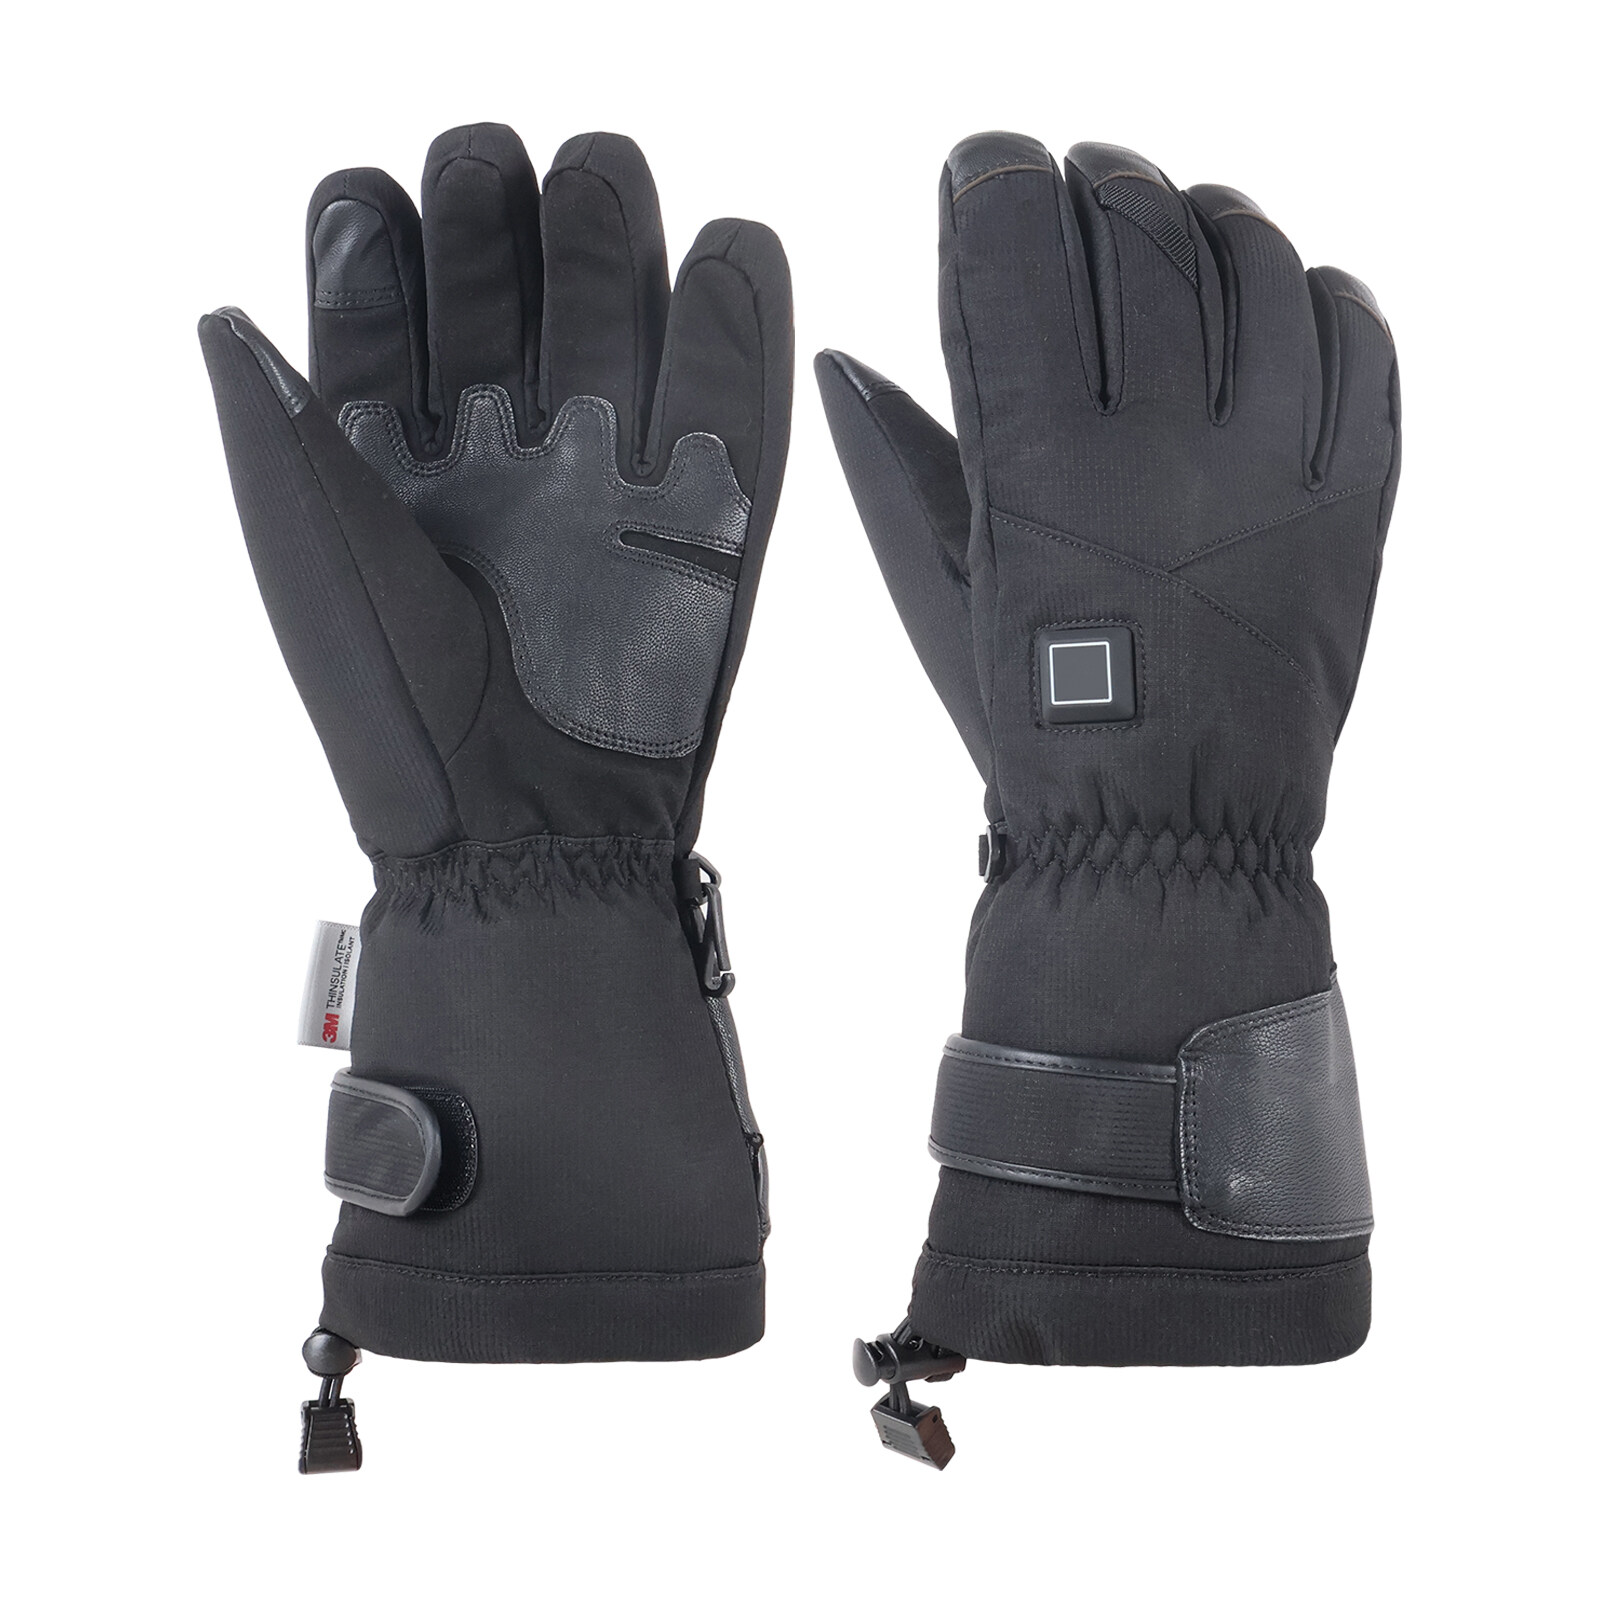 Unisex black electric gloves heating